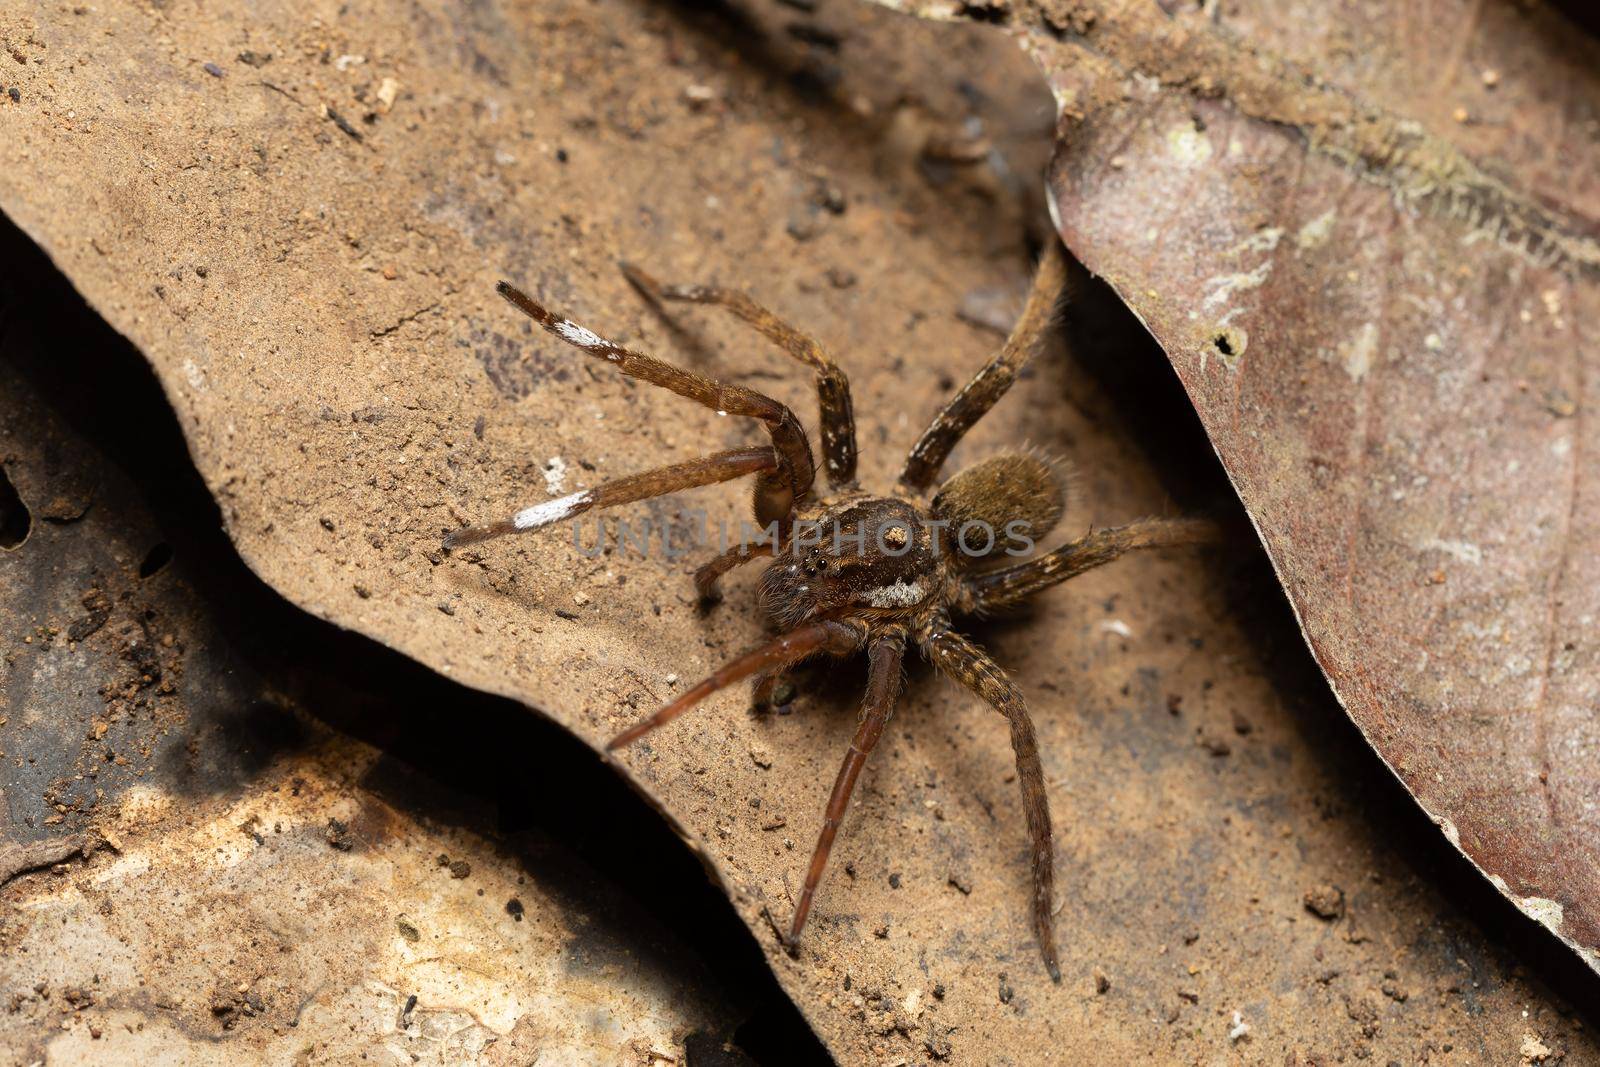 Wandering Spider, Ctenidae family, Costa Rica by artush